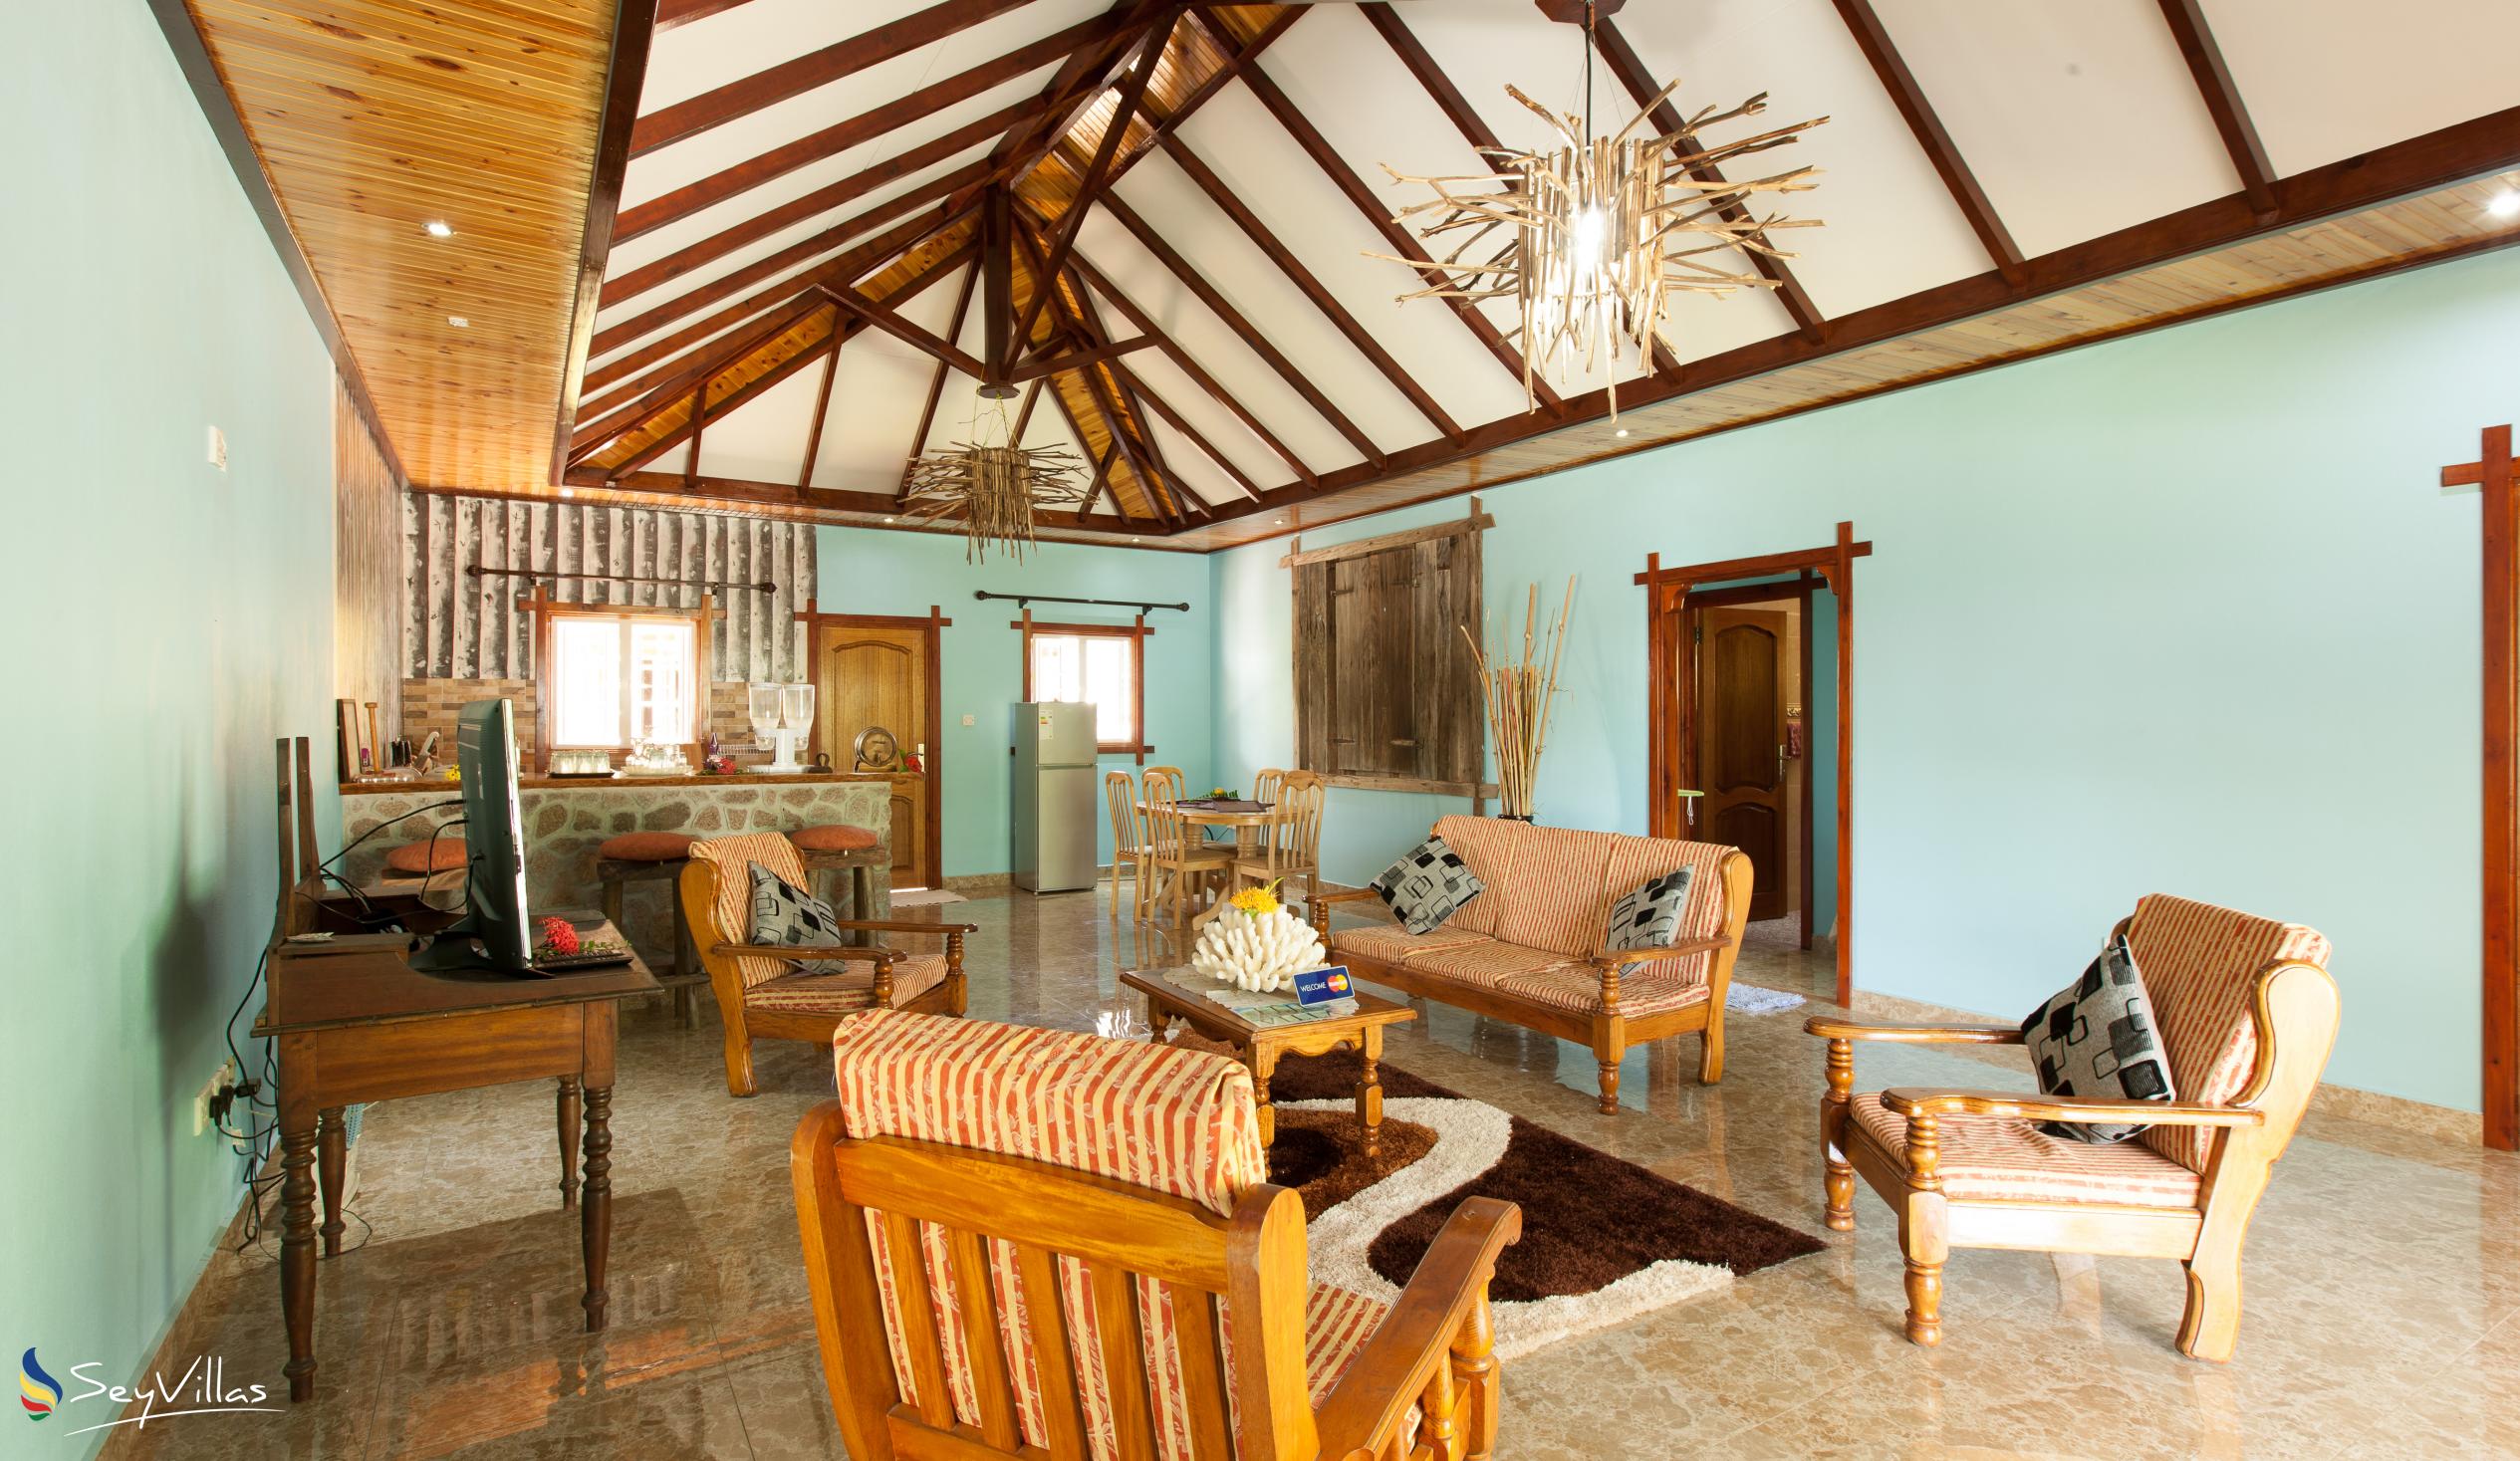 Photo 51: Elje Villa - 3-Bedroom House - La Digue (Seychelles)